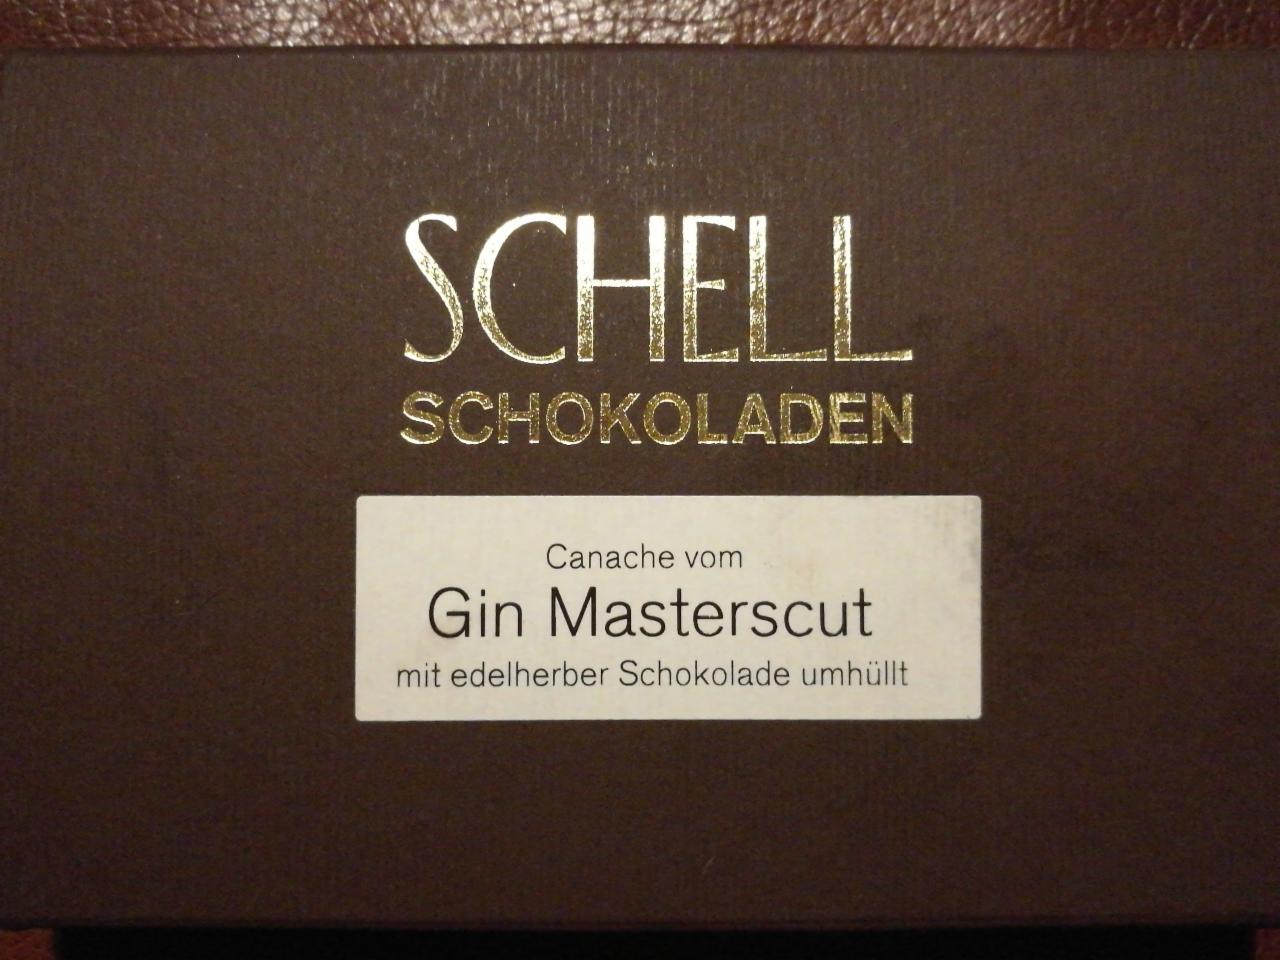 Fotografie - Schell schokoladen gin masterscut